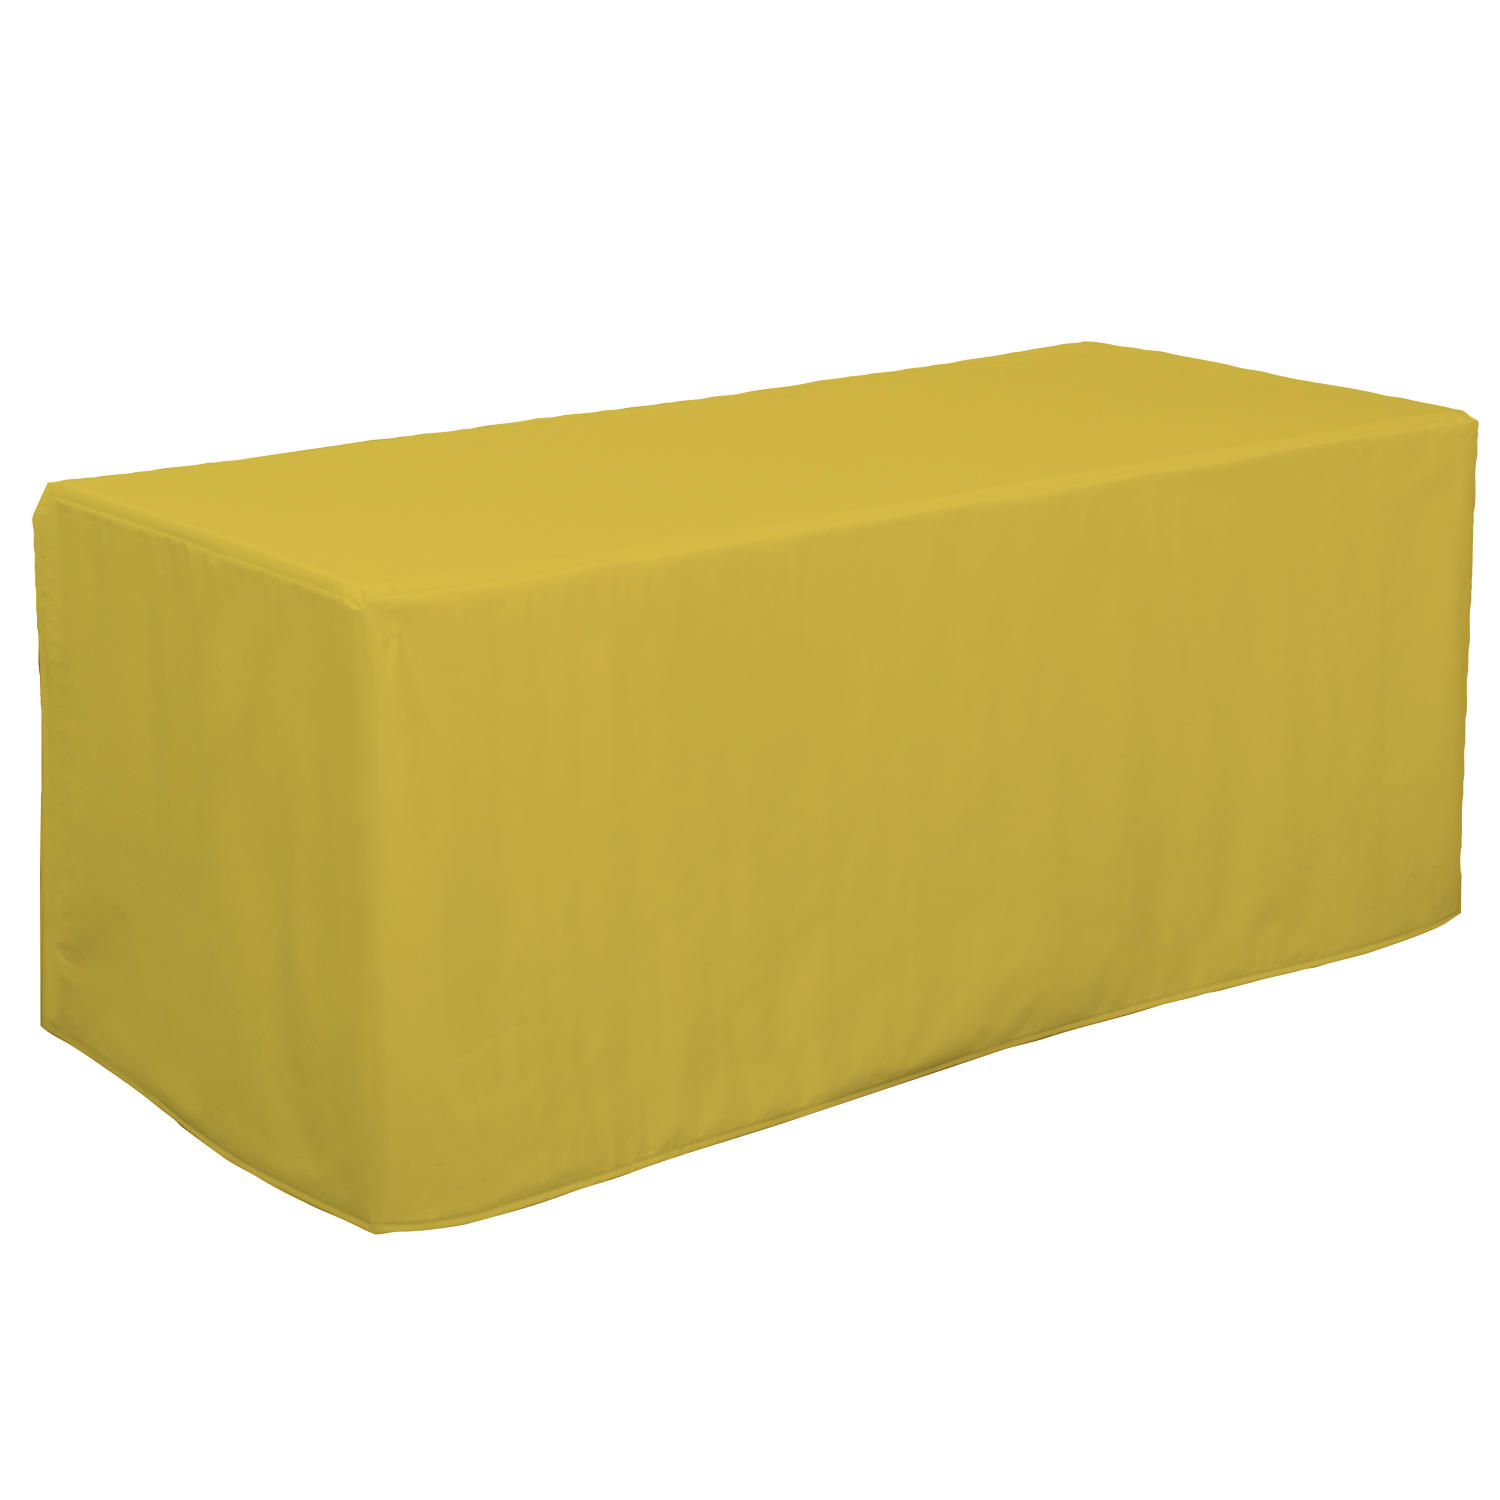 6-decobrite-nylon-table-cover-3-sided-unimprintedyellow